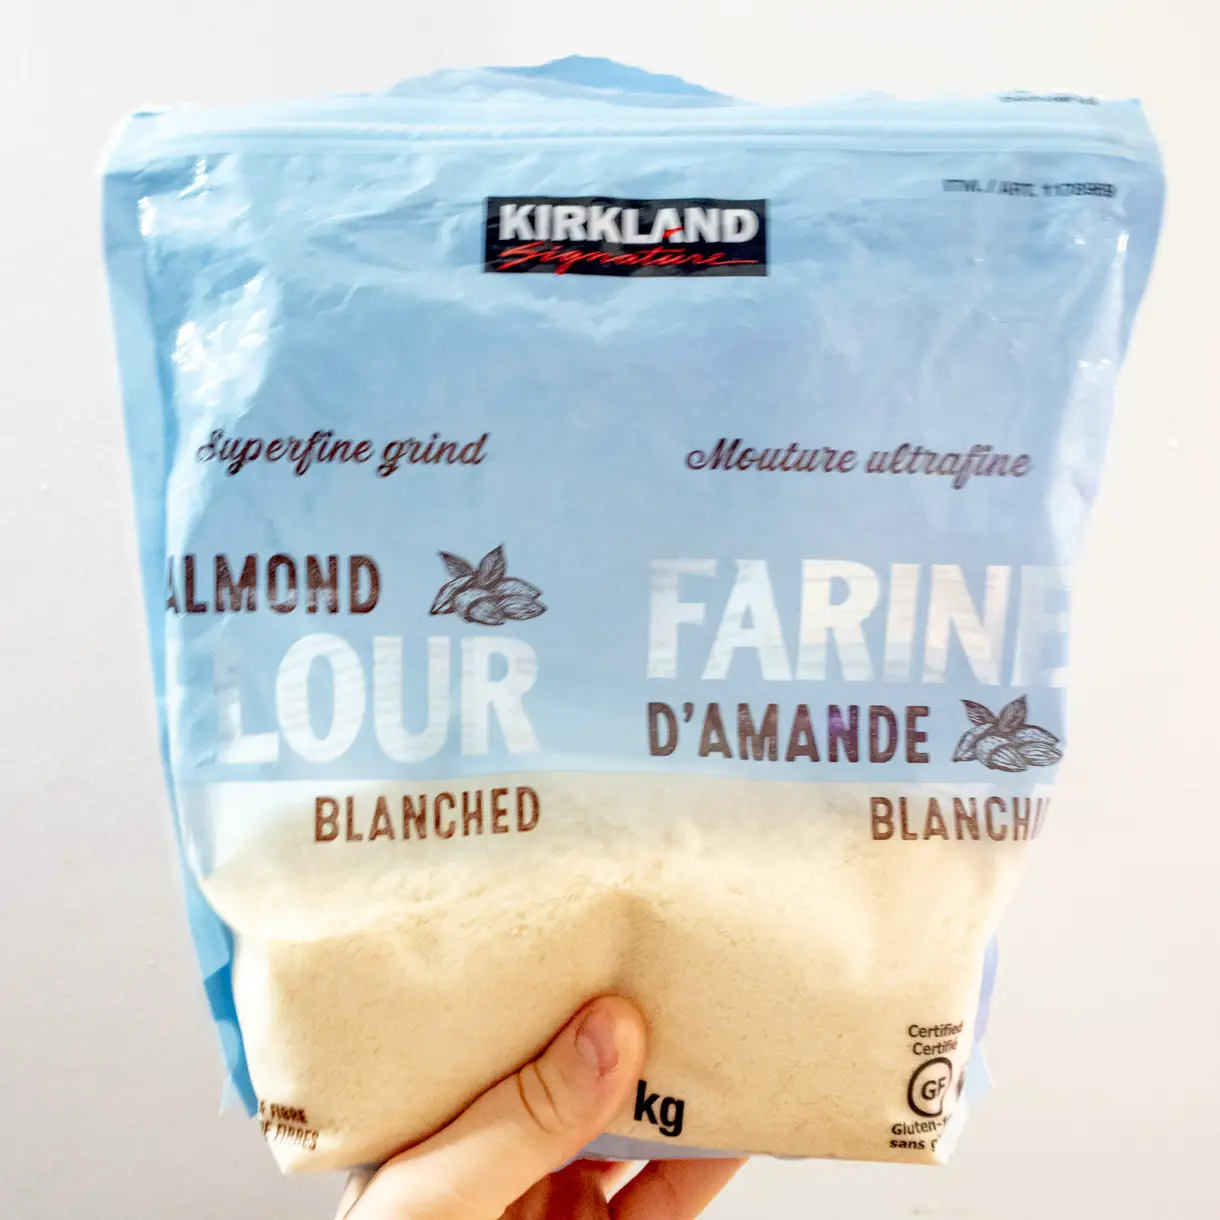 Bag of Kirkland Blanched almond flour.